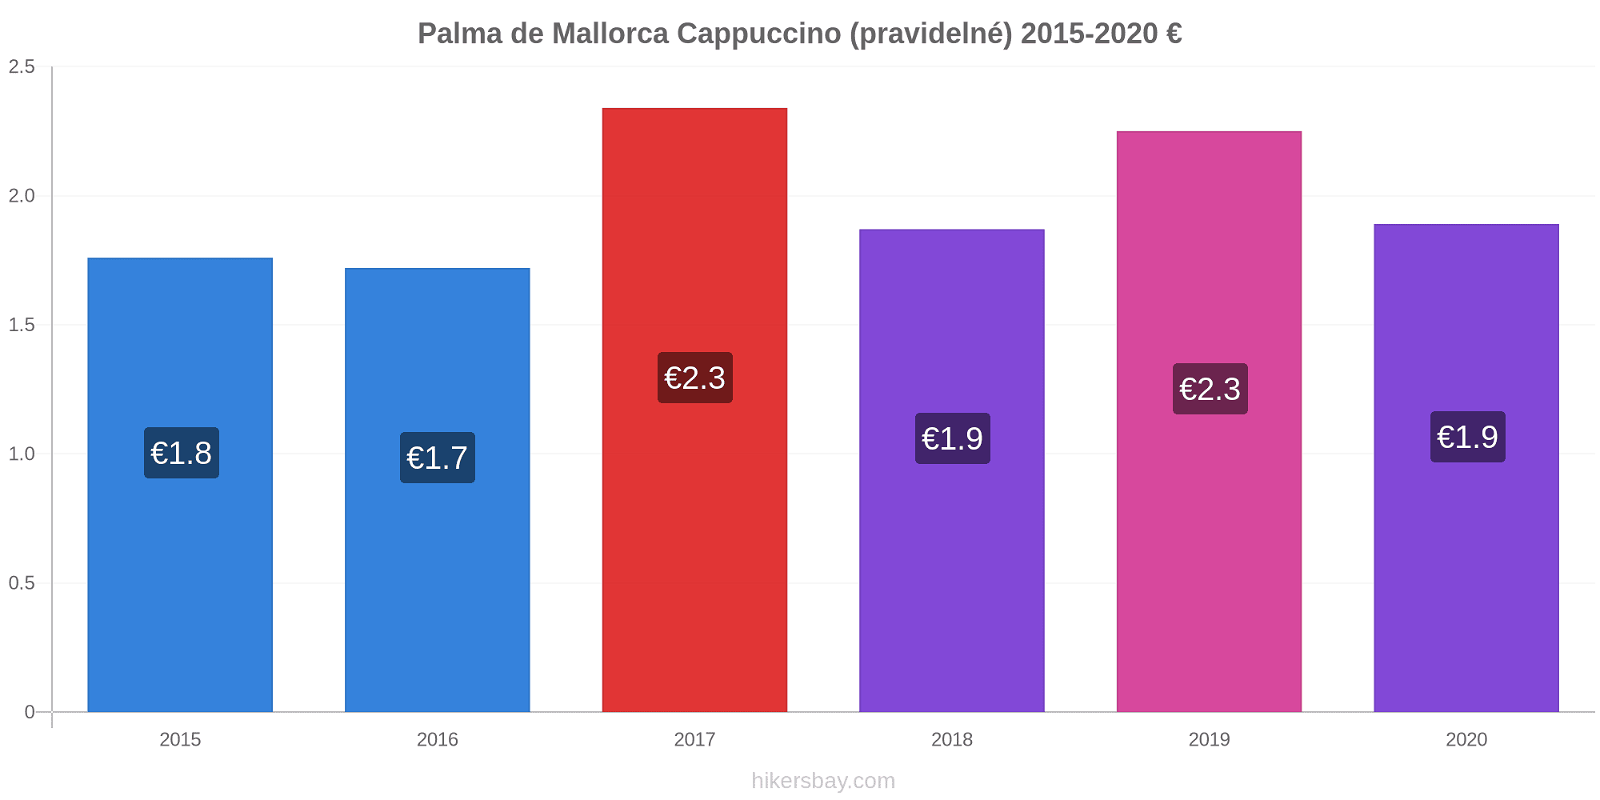 Palma de Mallorca změny cen Cappuccino (pravidelné) hikersbay.com